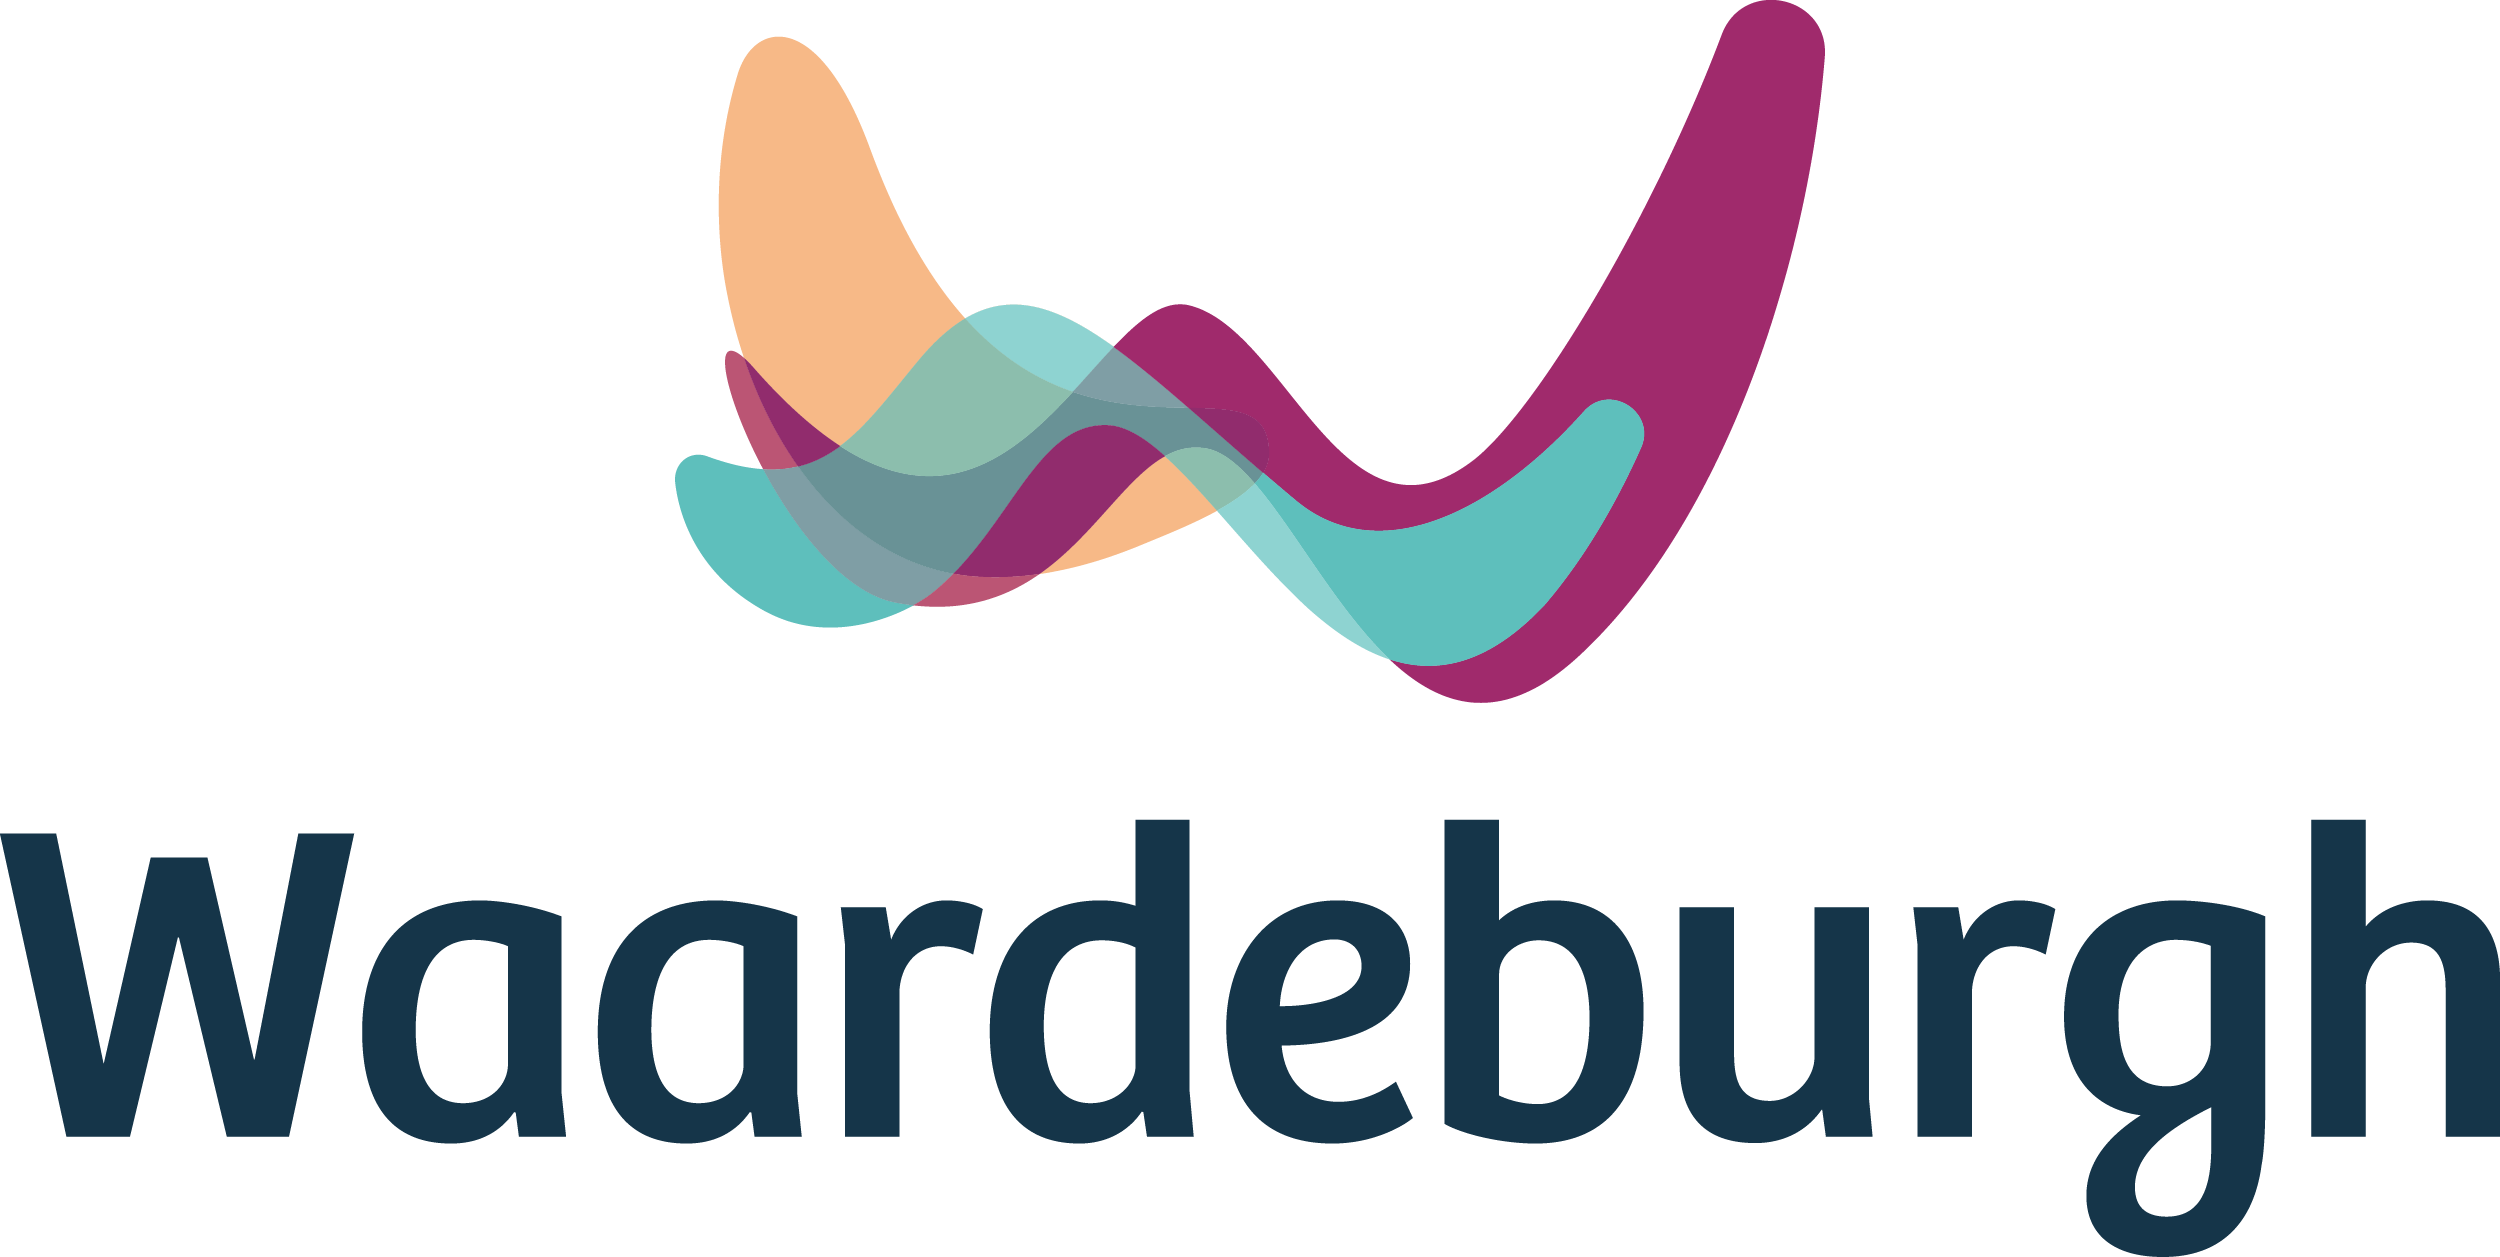 Waardeburgh - Logo - RGB